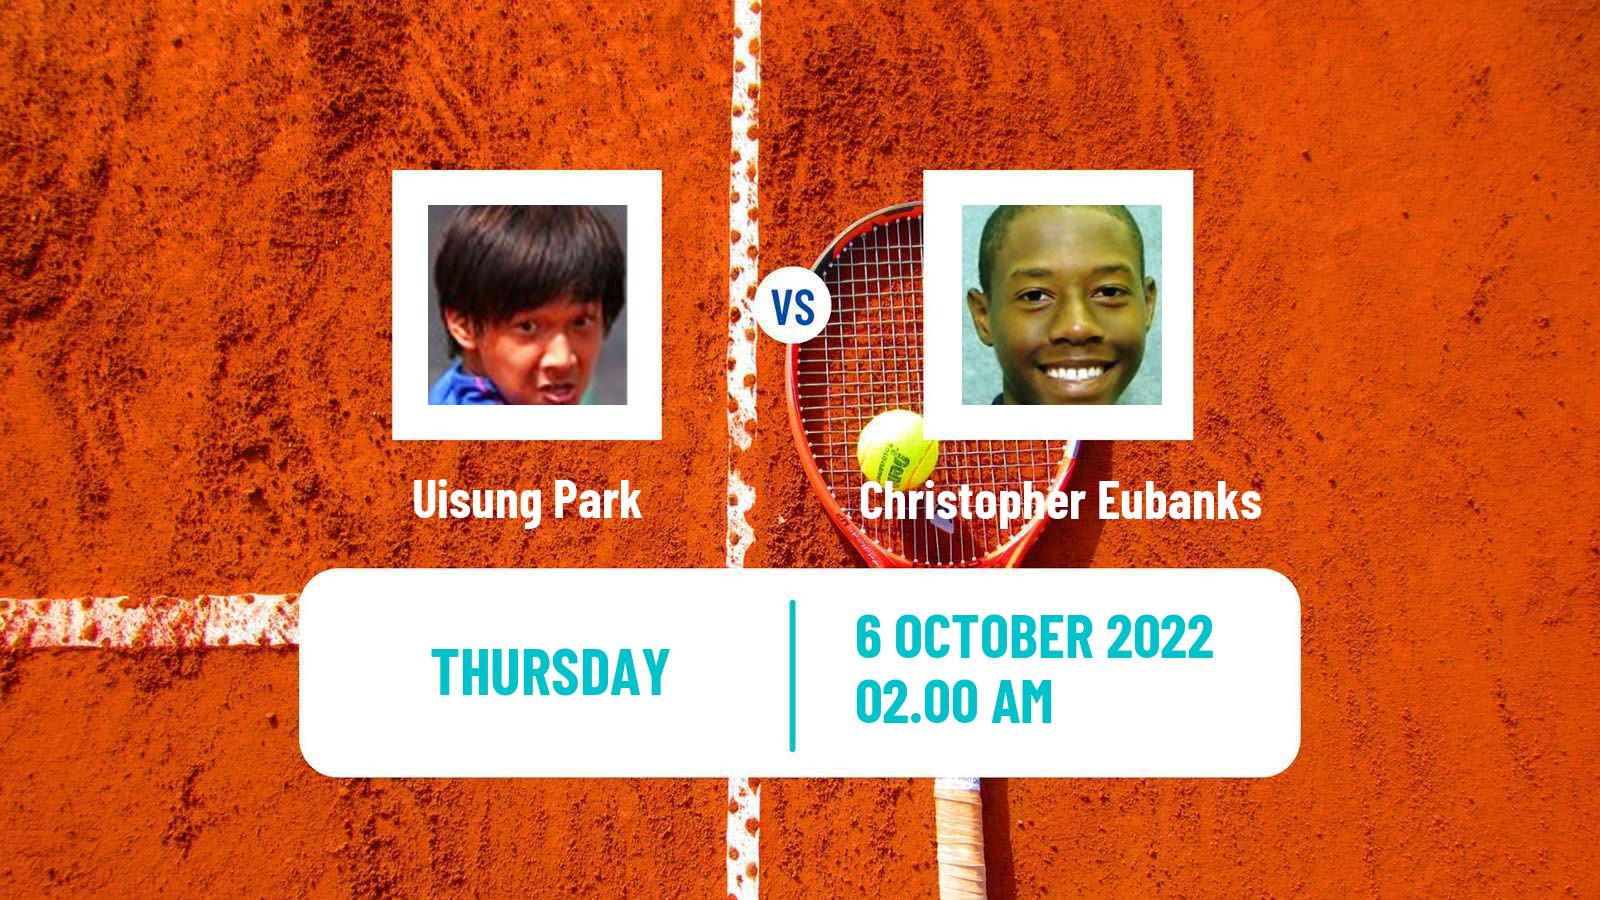 Tennis ATP Challenger Uisung Park - Christopher Eubanks